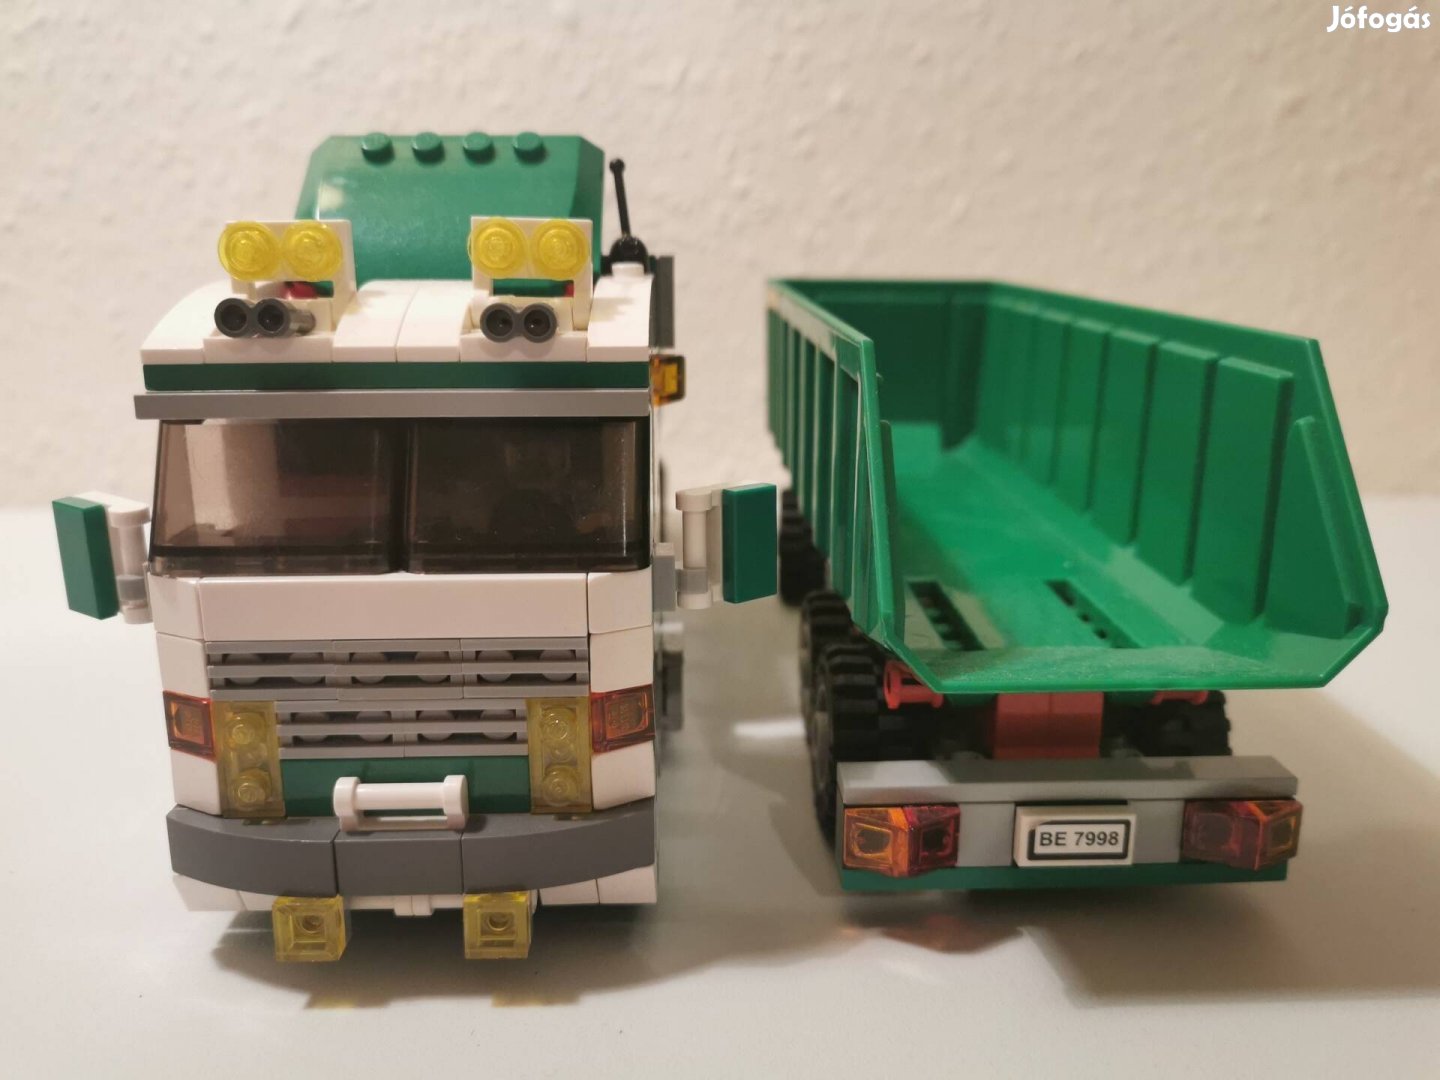 Lego 7998 heavy hauler 